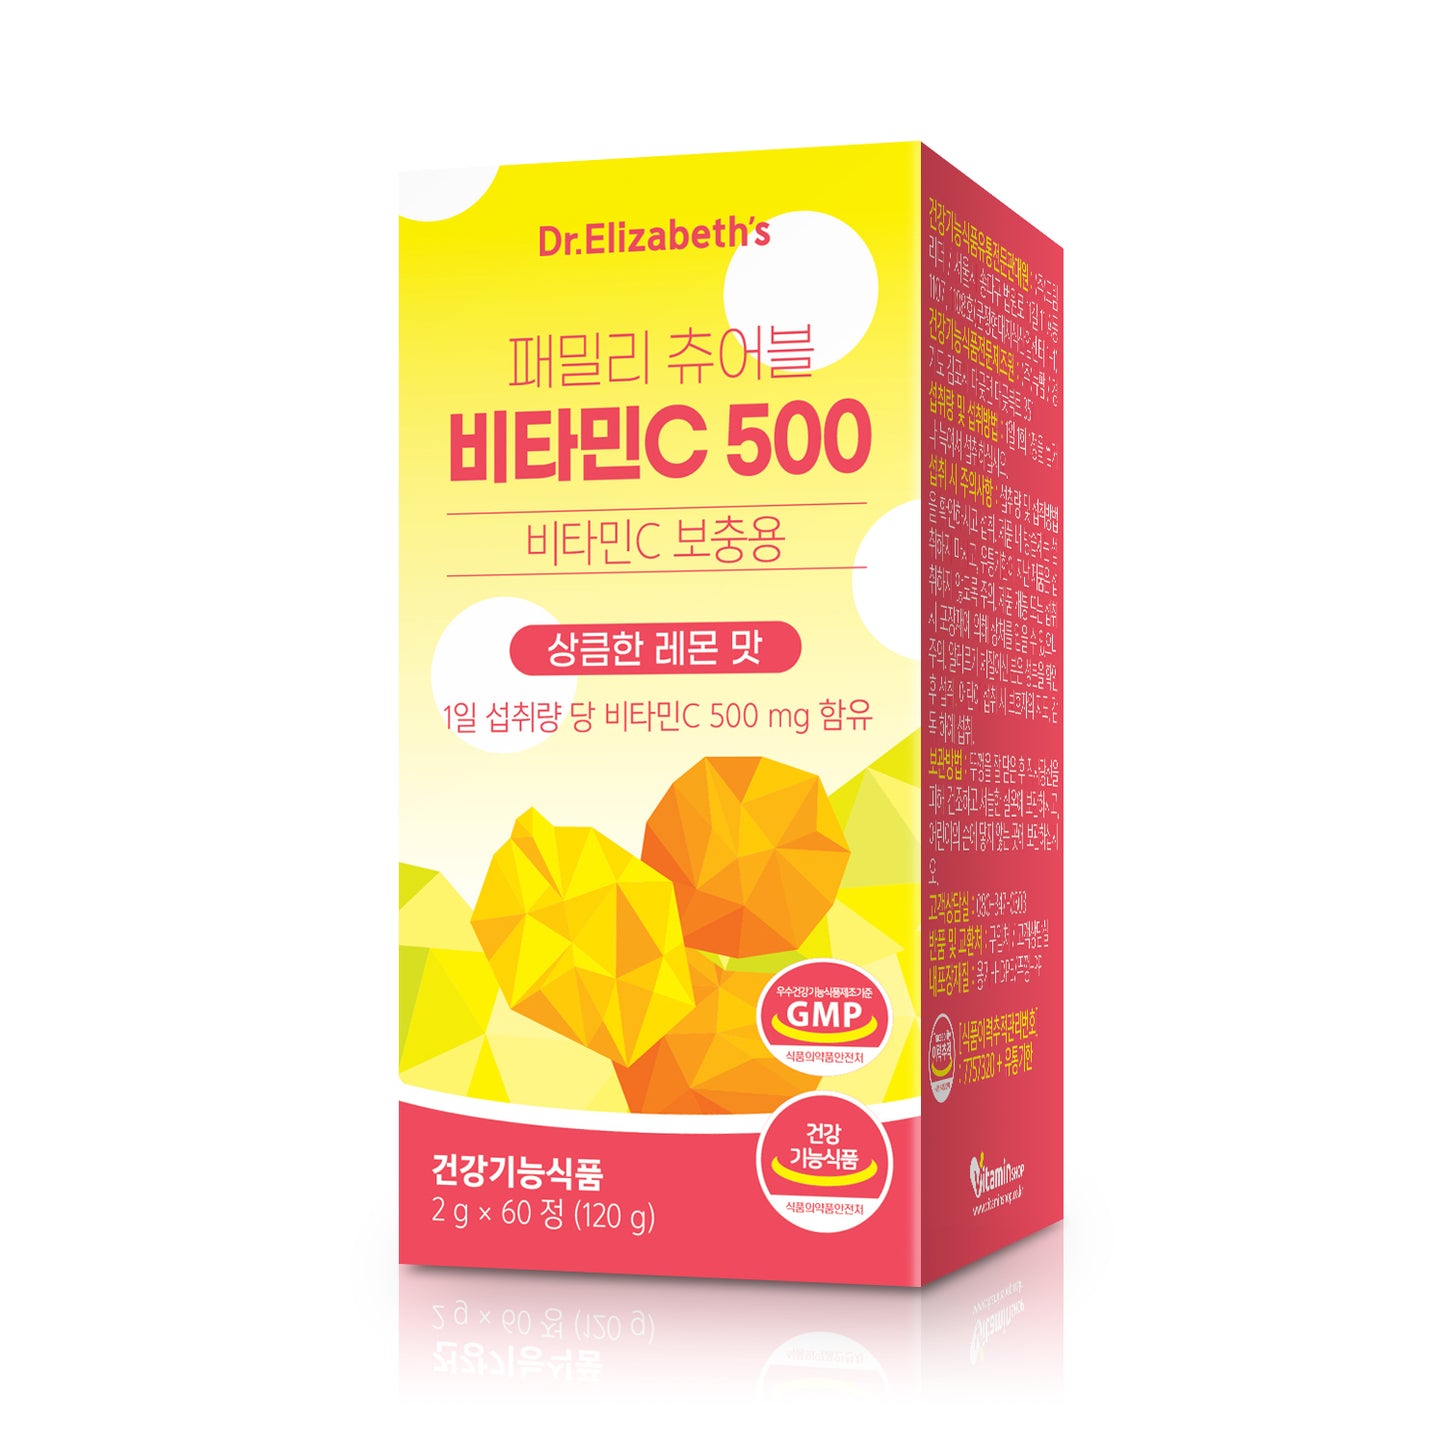 Dr. Elizabeth’s Family Chewable Vitamin-C 500 2g x 60 tablets Refreshing Lemon Flavour for Optimal Health